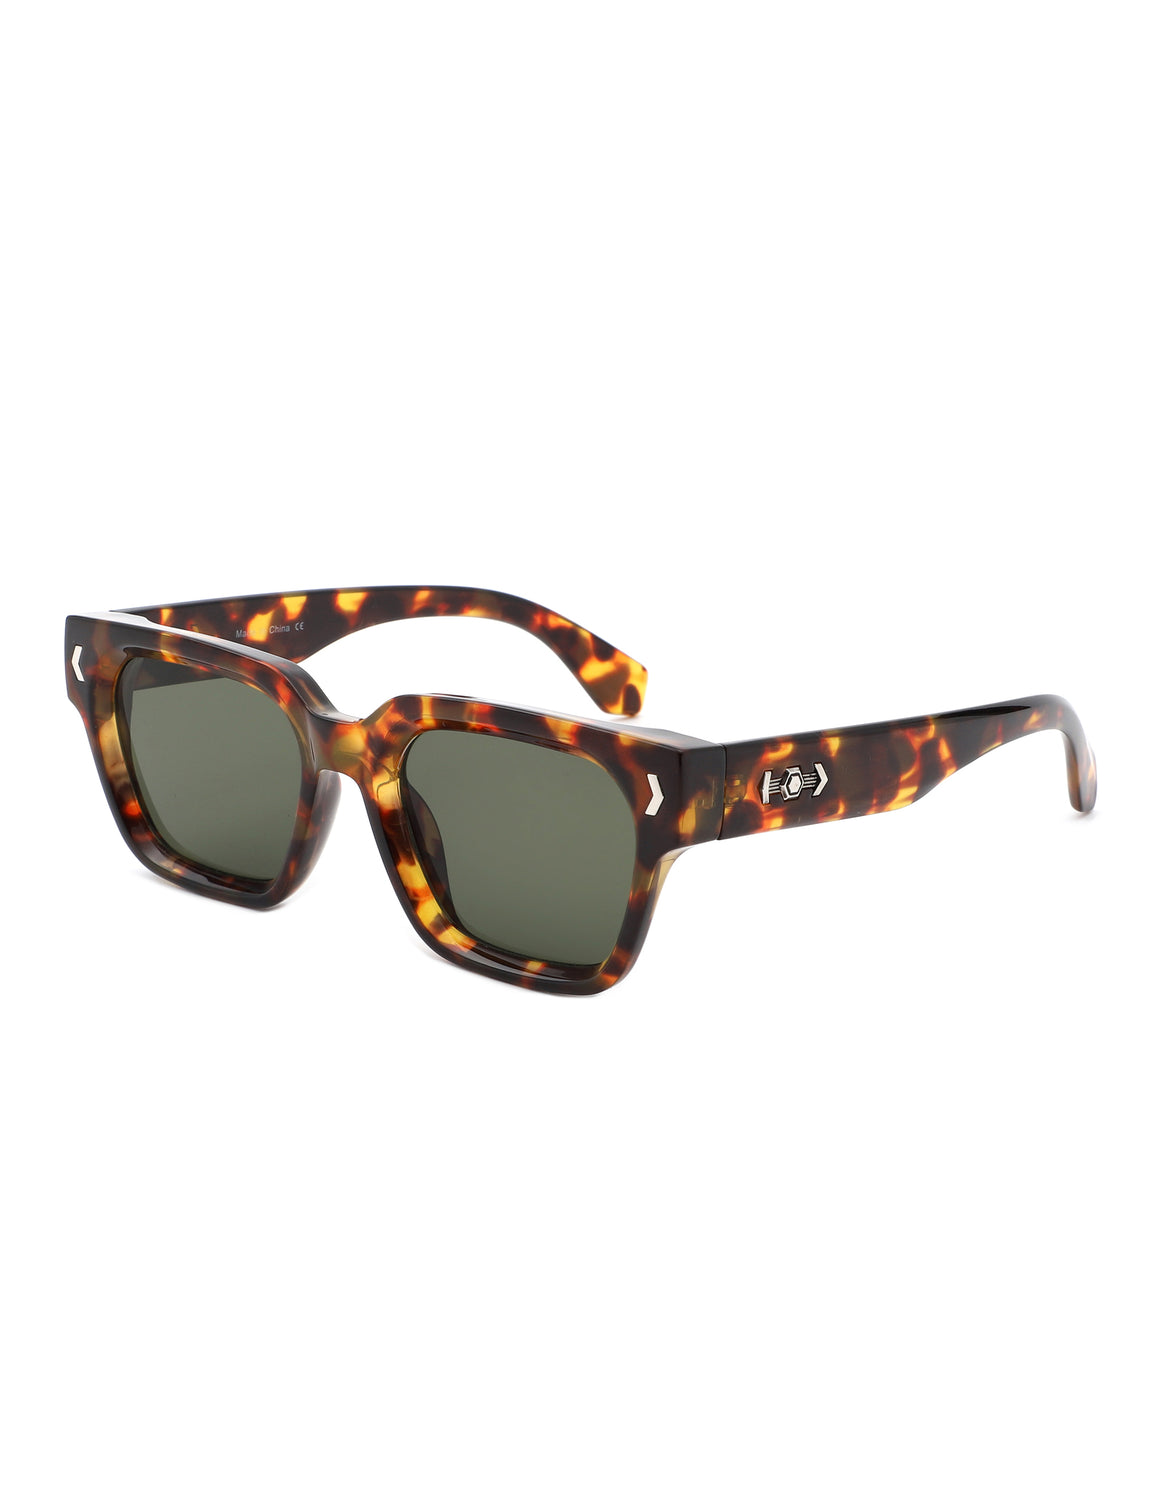 Rutrary - Cramilo Retro Thick Square Frame Women's Fashion Sunglasses